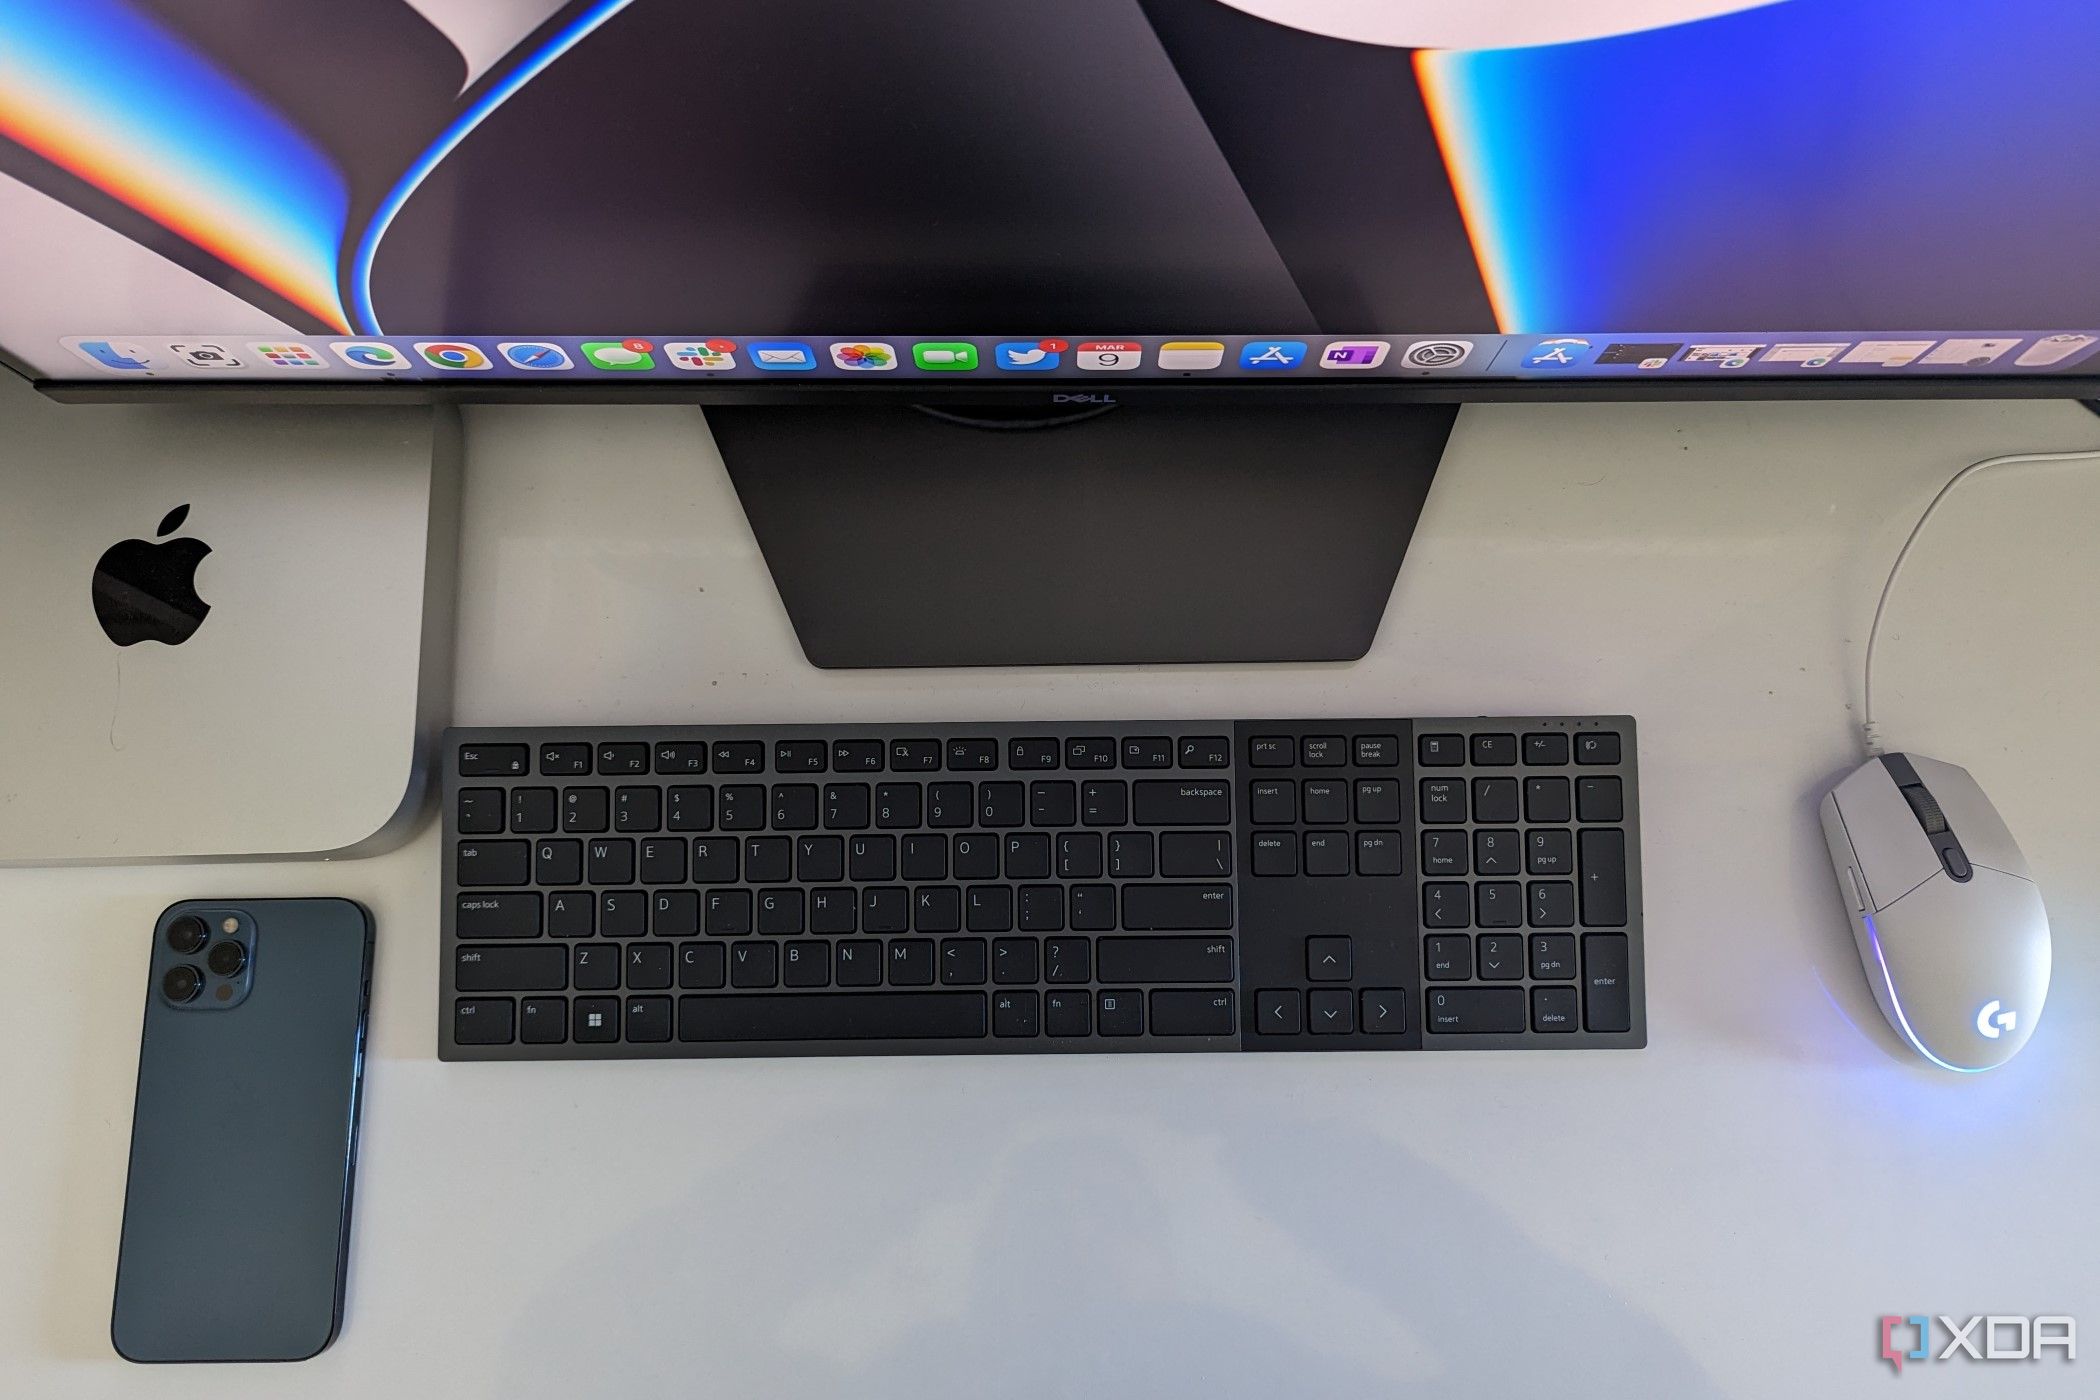 A Mac Mini with keyboard and iPhone